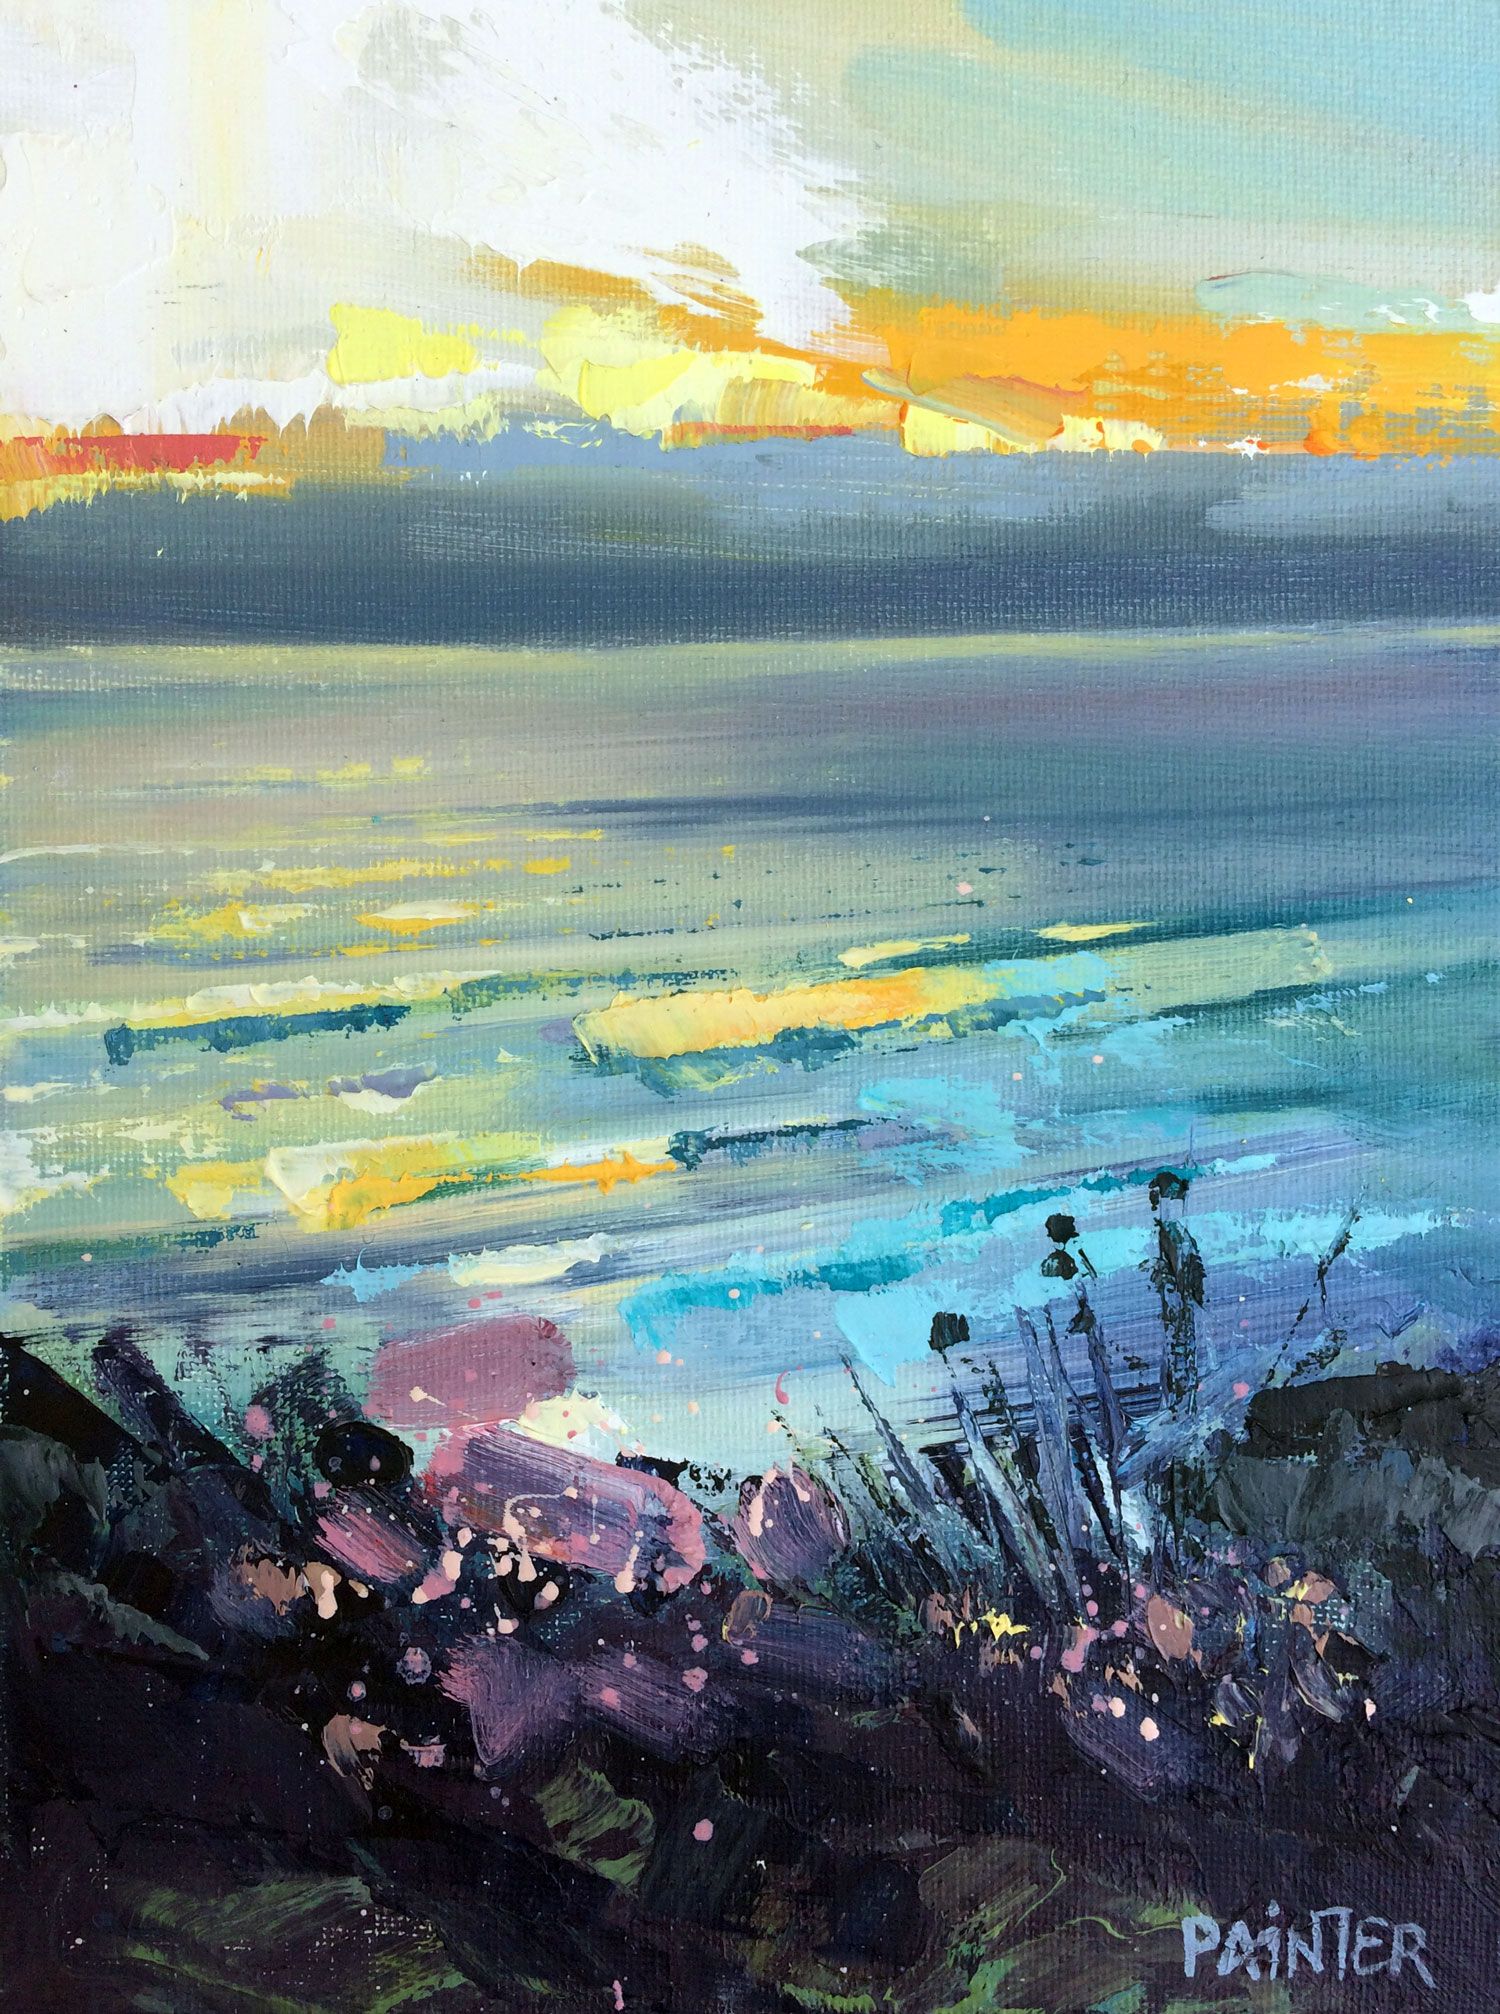 The Water & Horizon No.5 by Rachel Painter